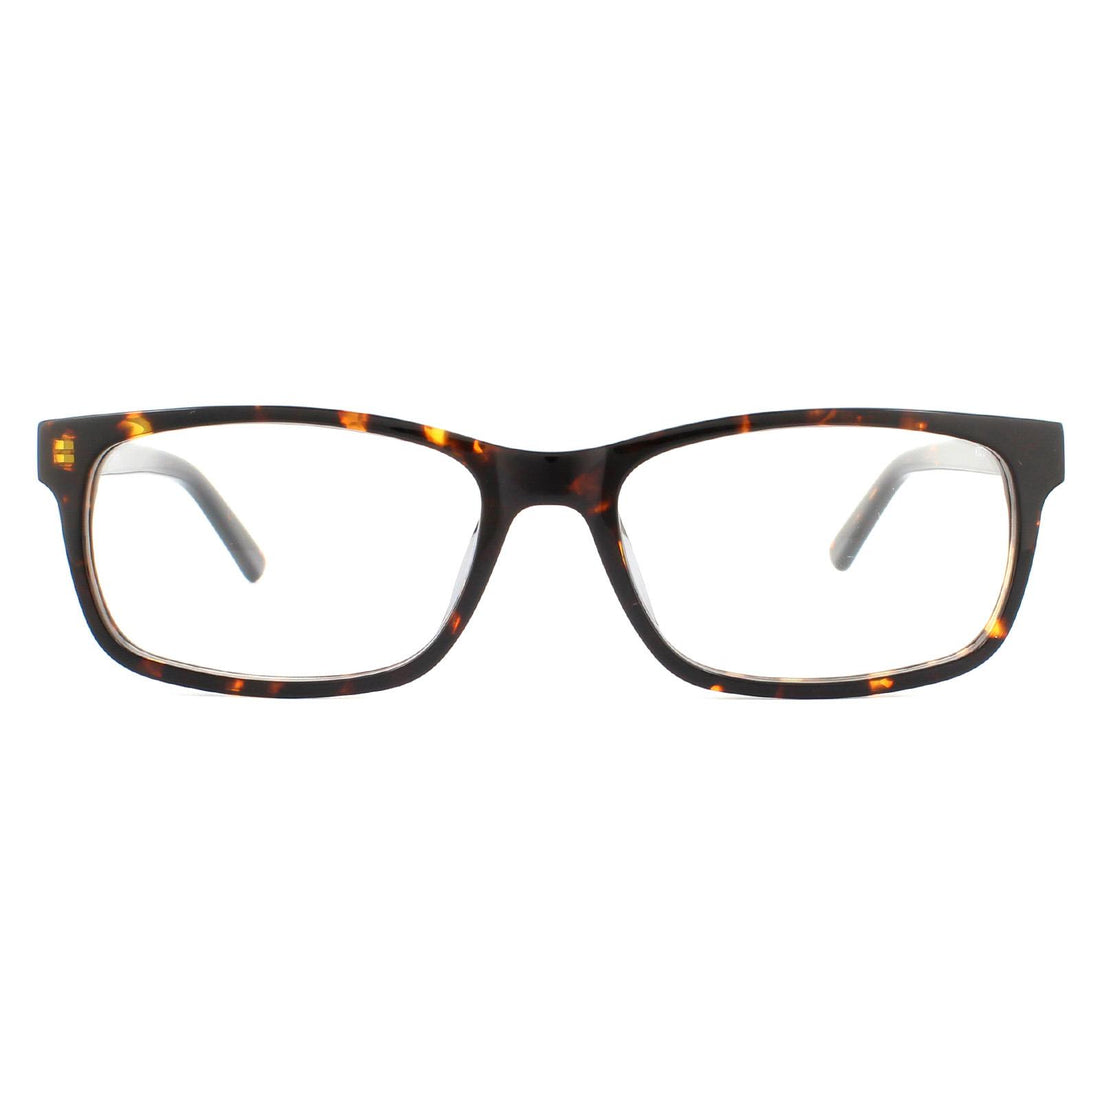 SunOptic A70 Glasses Frames Turtle Brown